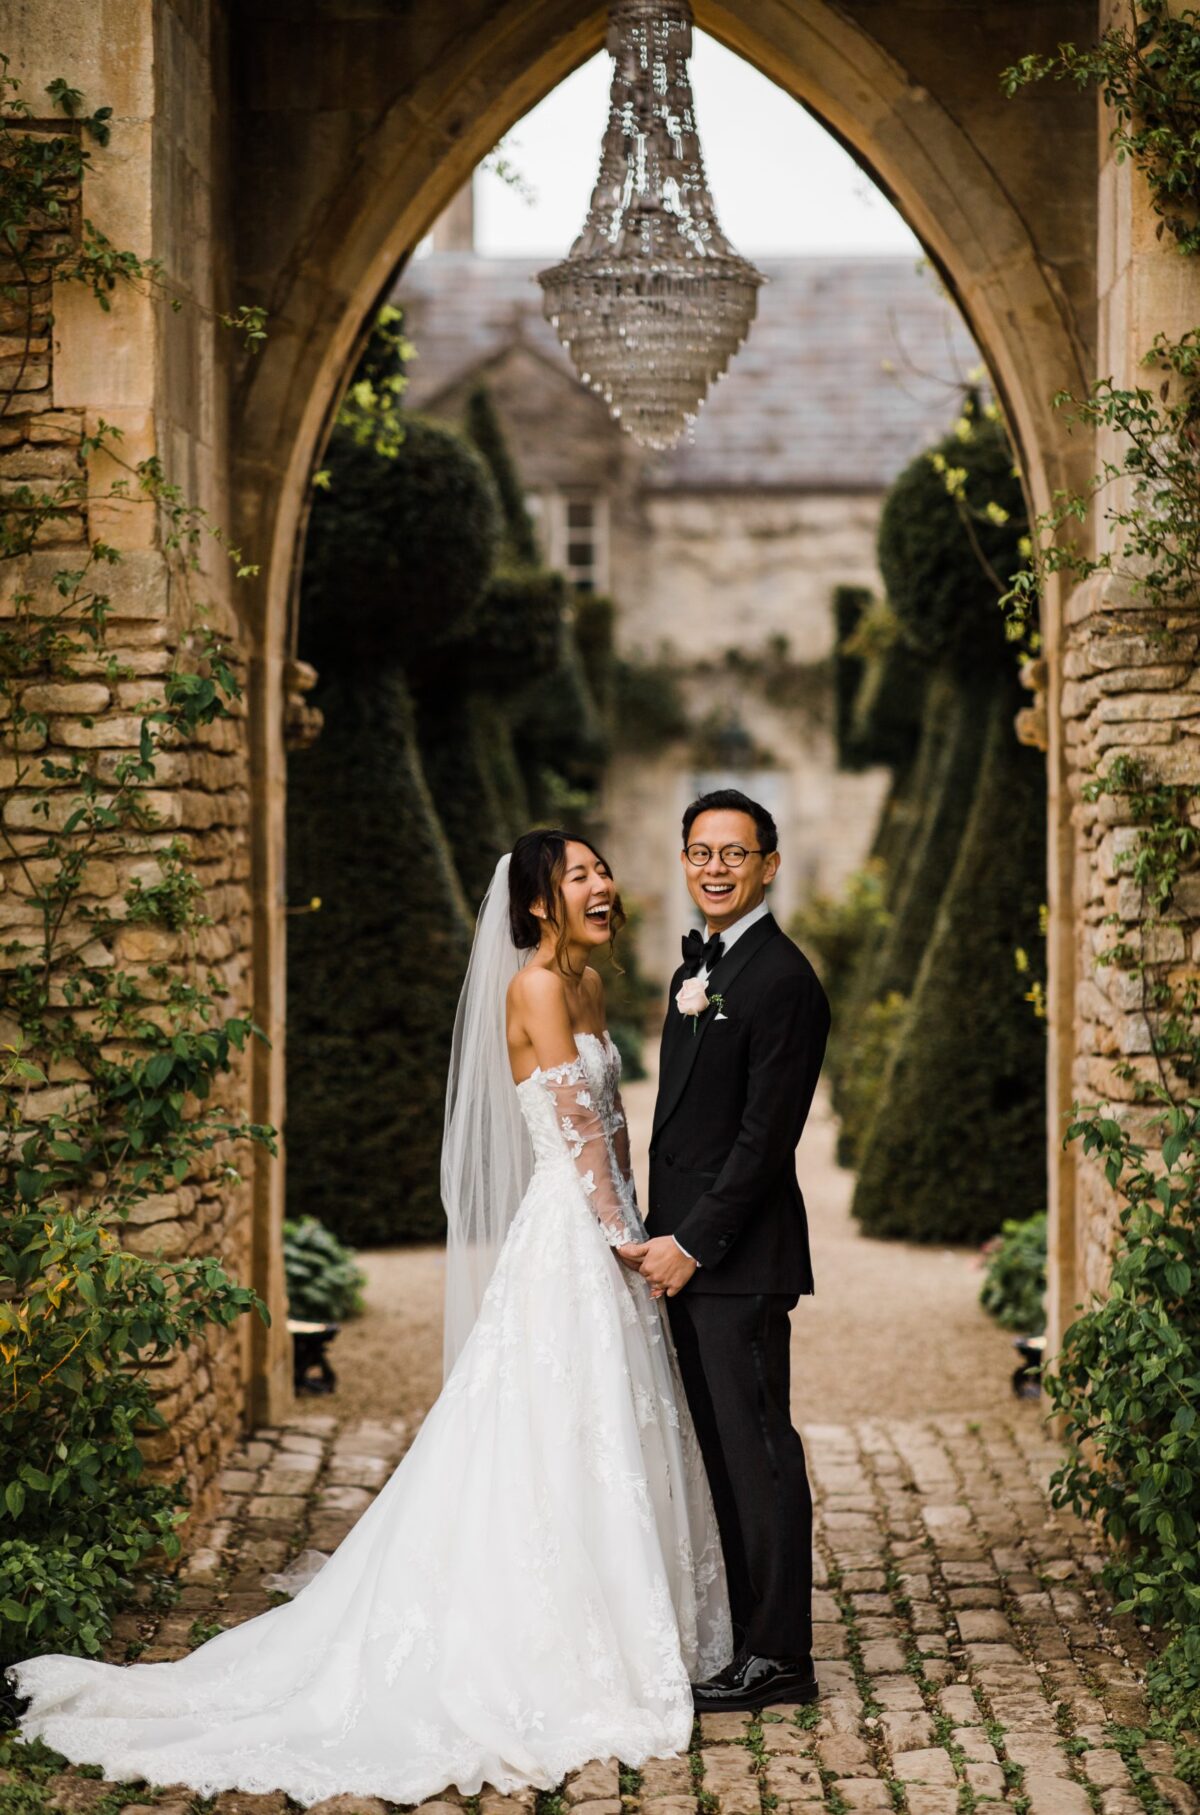 Bride and groom posing under chandelier at Euridge Manor | Wedding designer